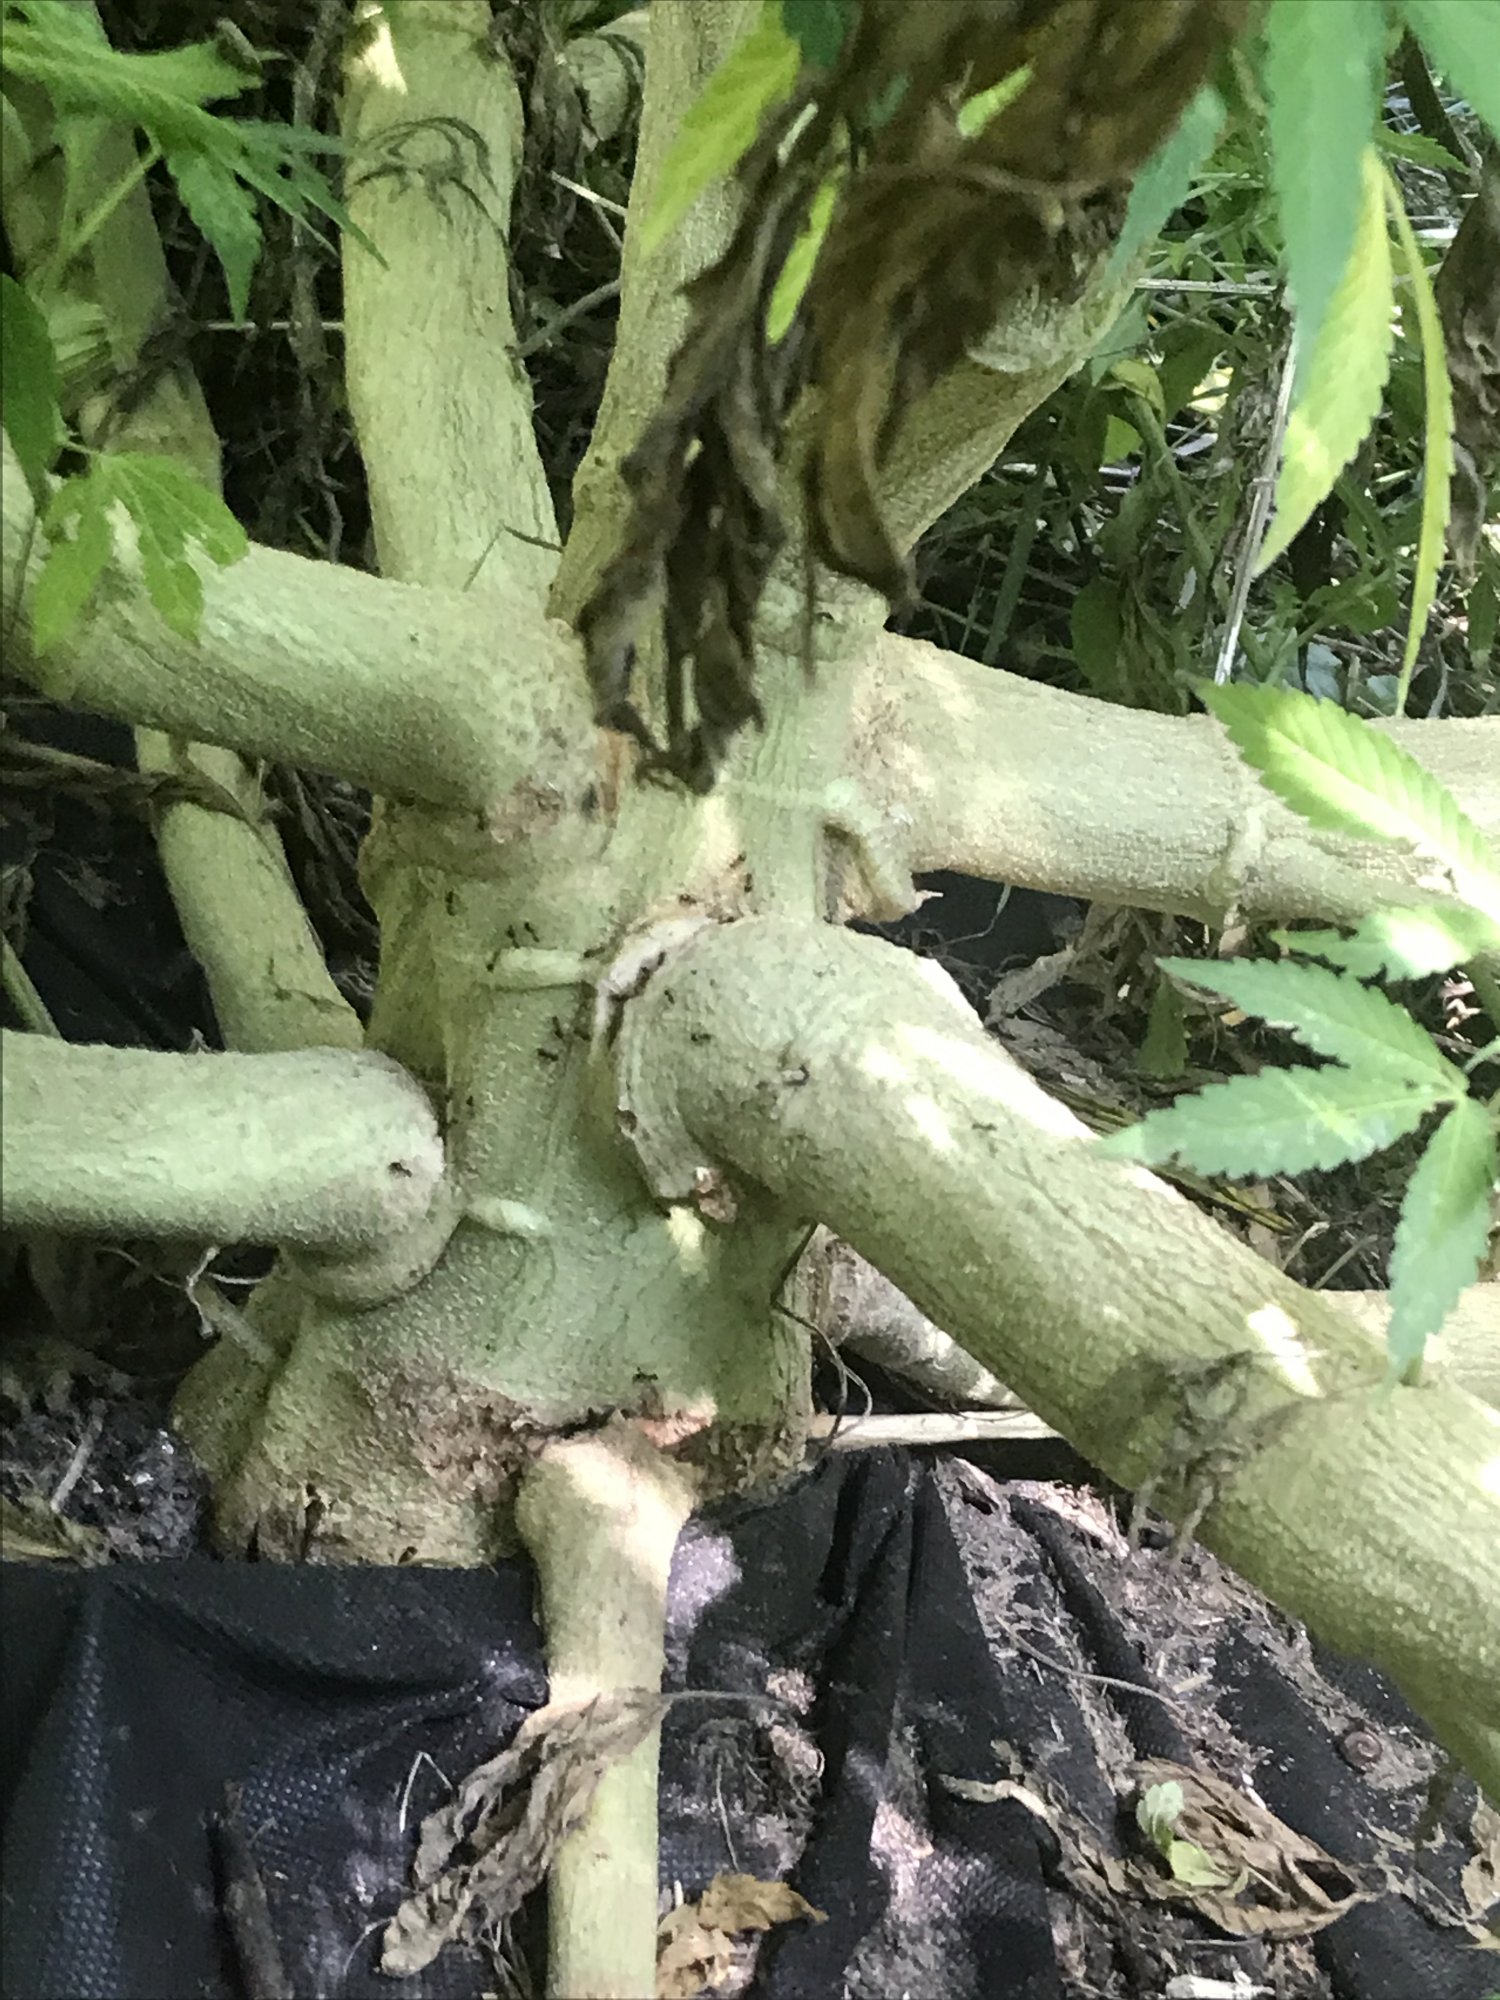 Bottom branch separating from main stalk